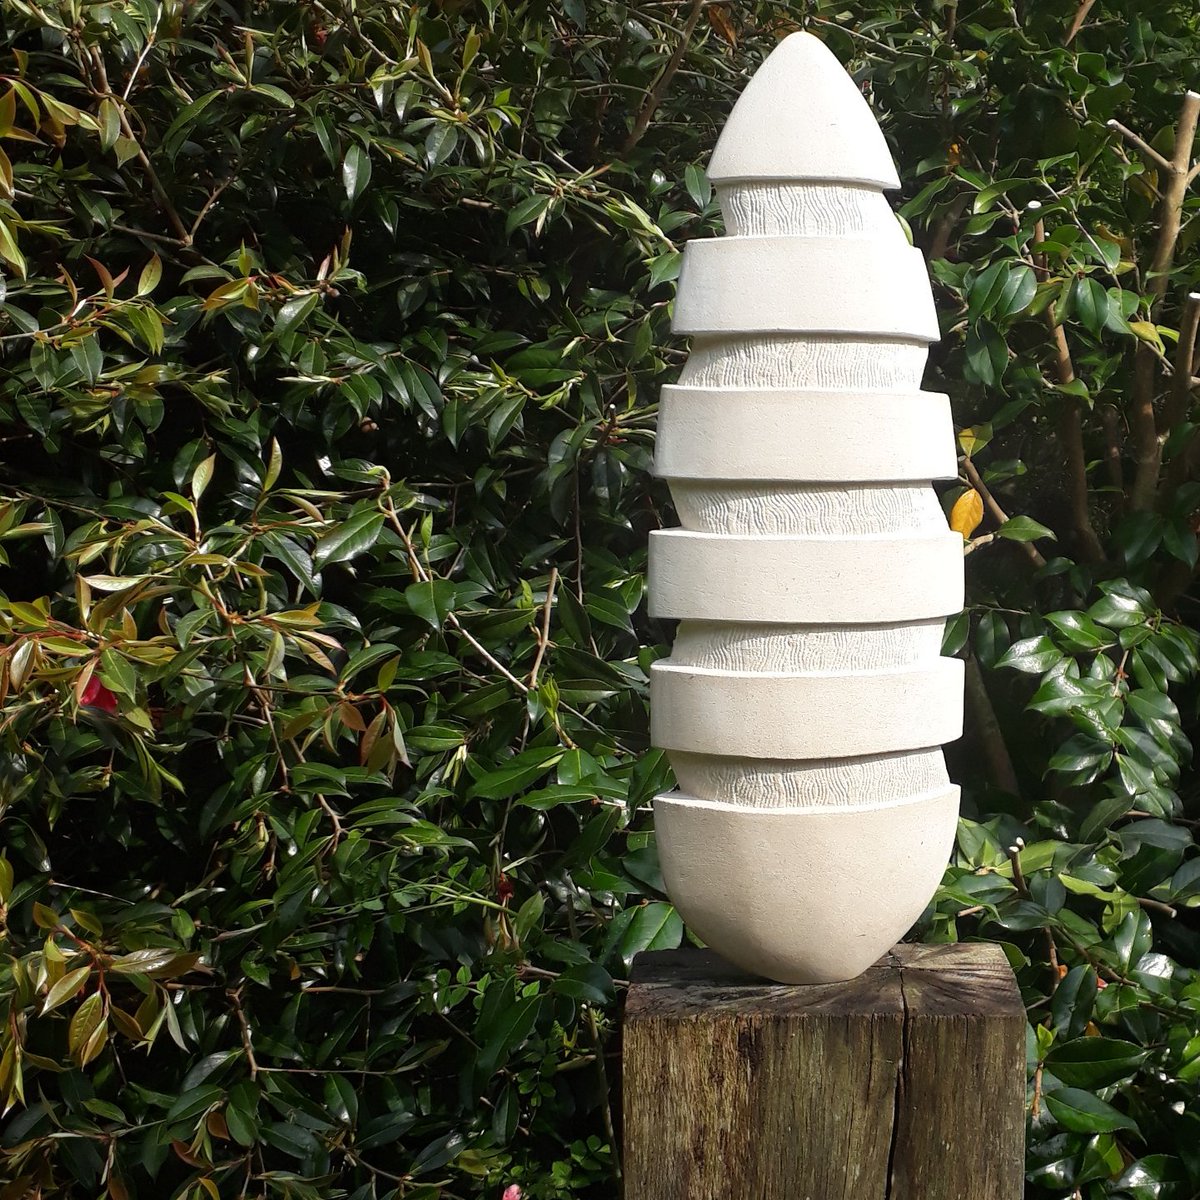 Portland stone sculpture placed in the delightful Broomhill Sculpture Garden in north Devon. 
#stone #sculpture #memorial #remember #funeral #funeraldirector #frome #southwest #memorialsculpture